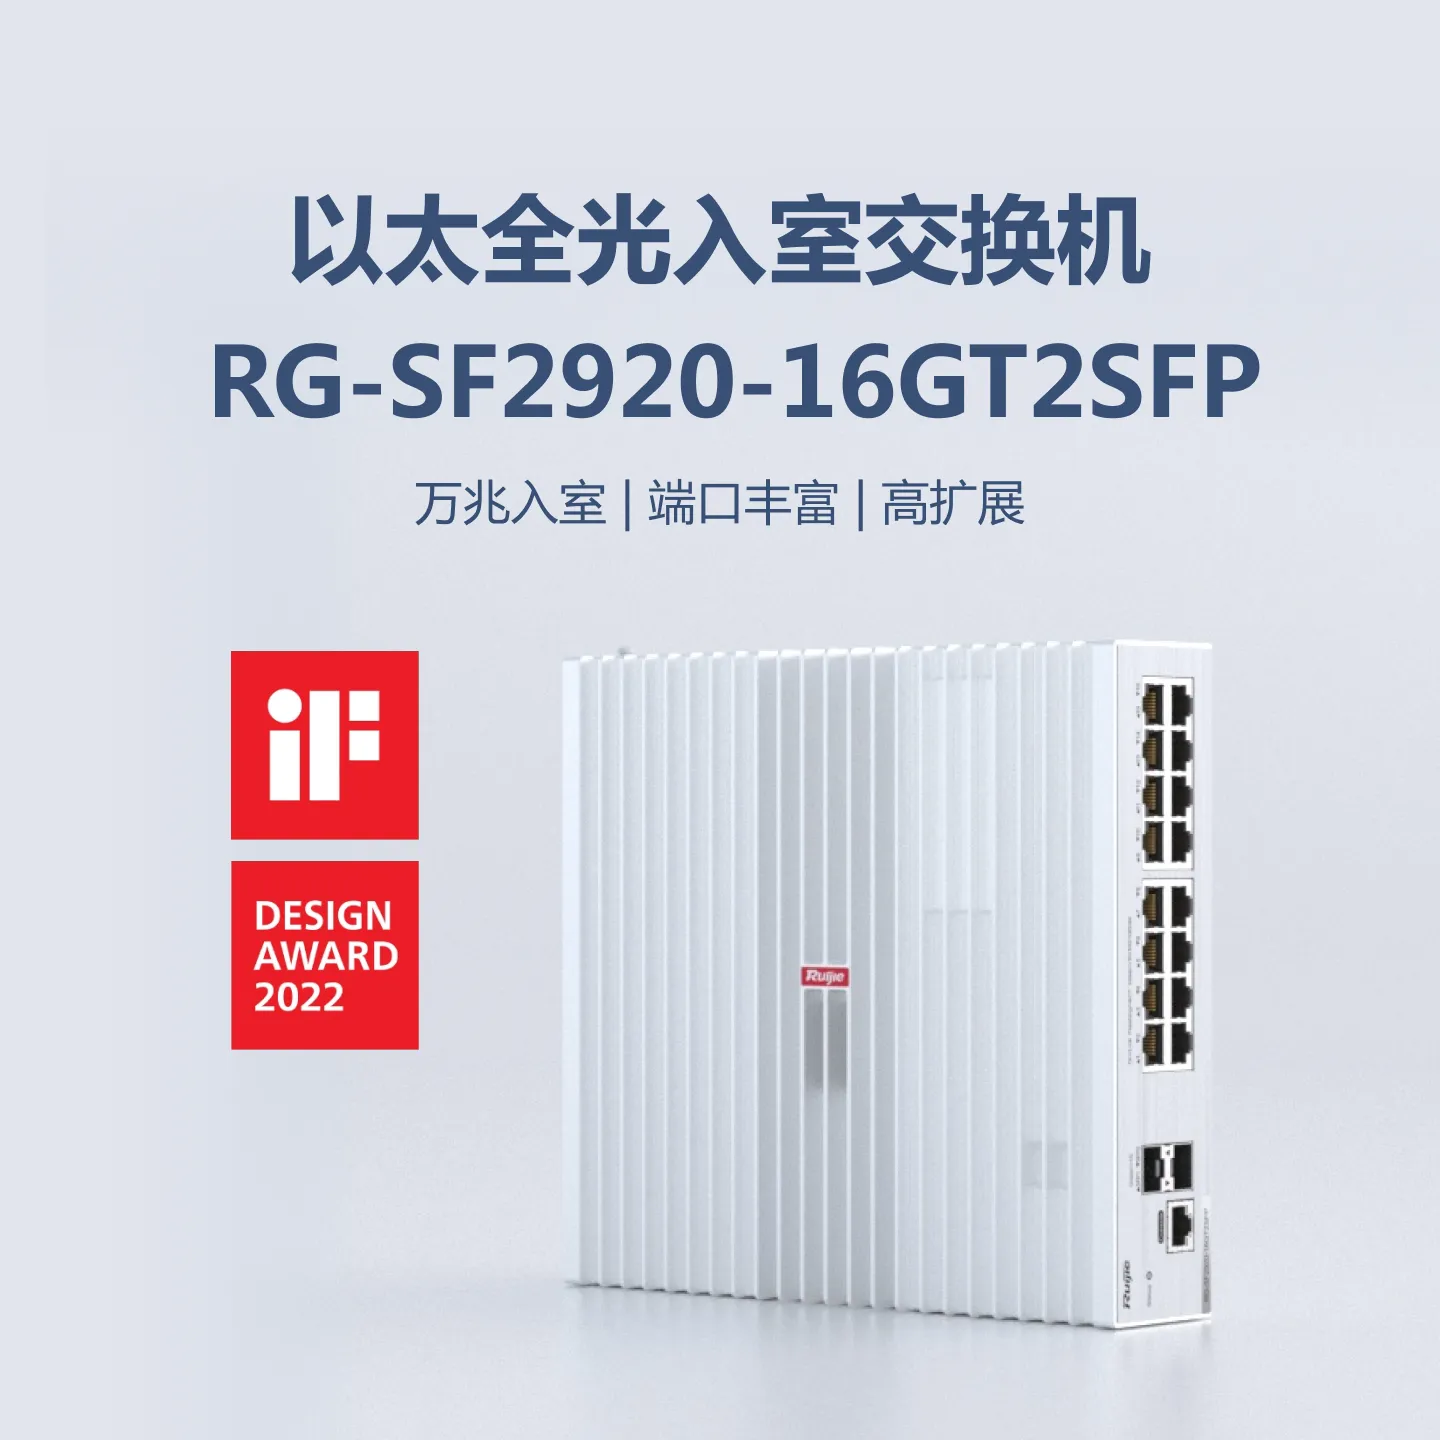 RG-SF2920-16GT2SFP